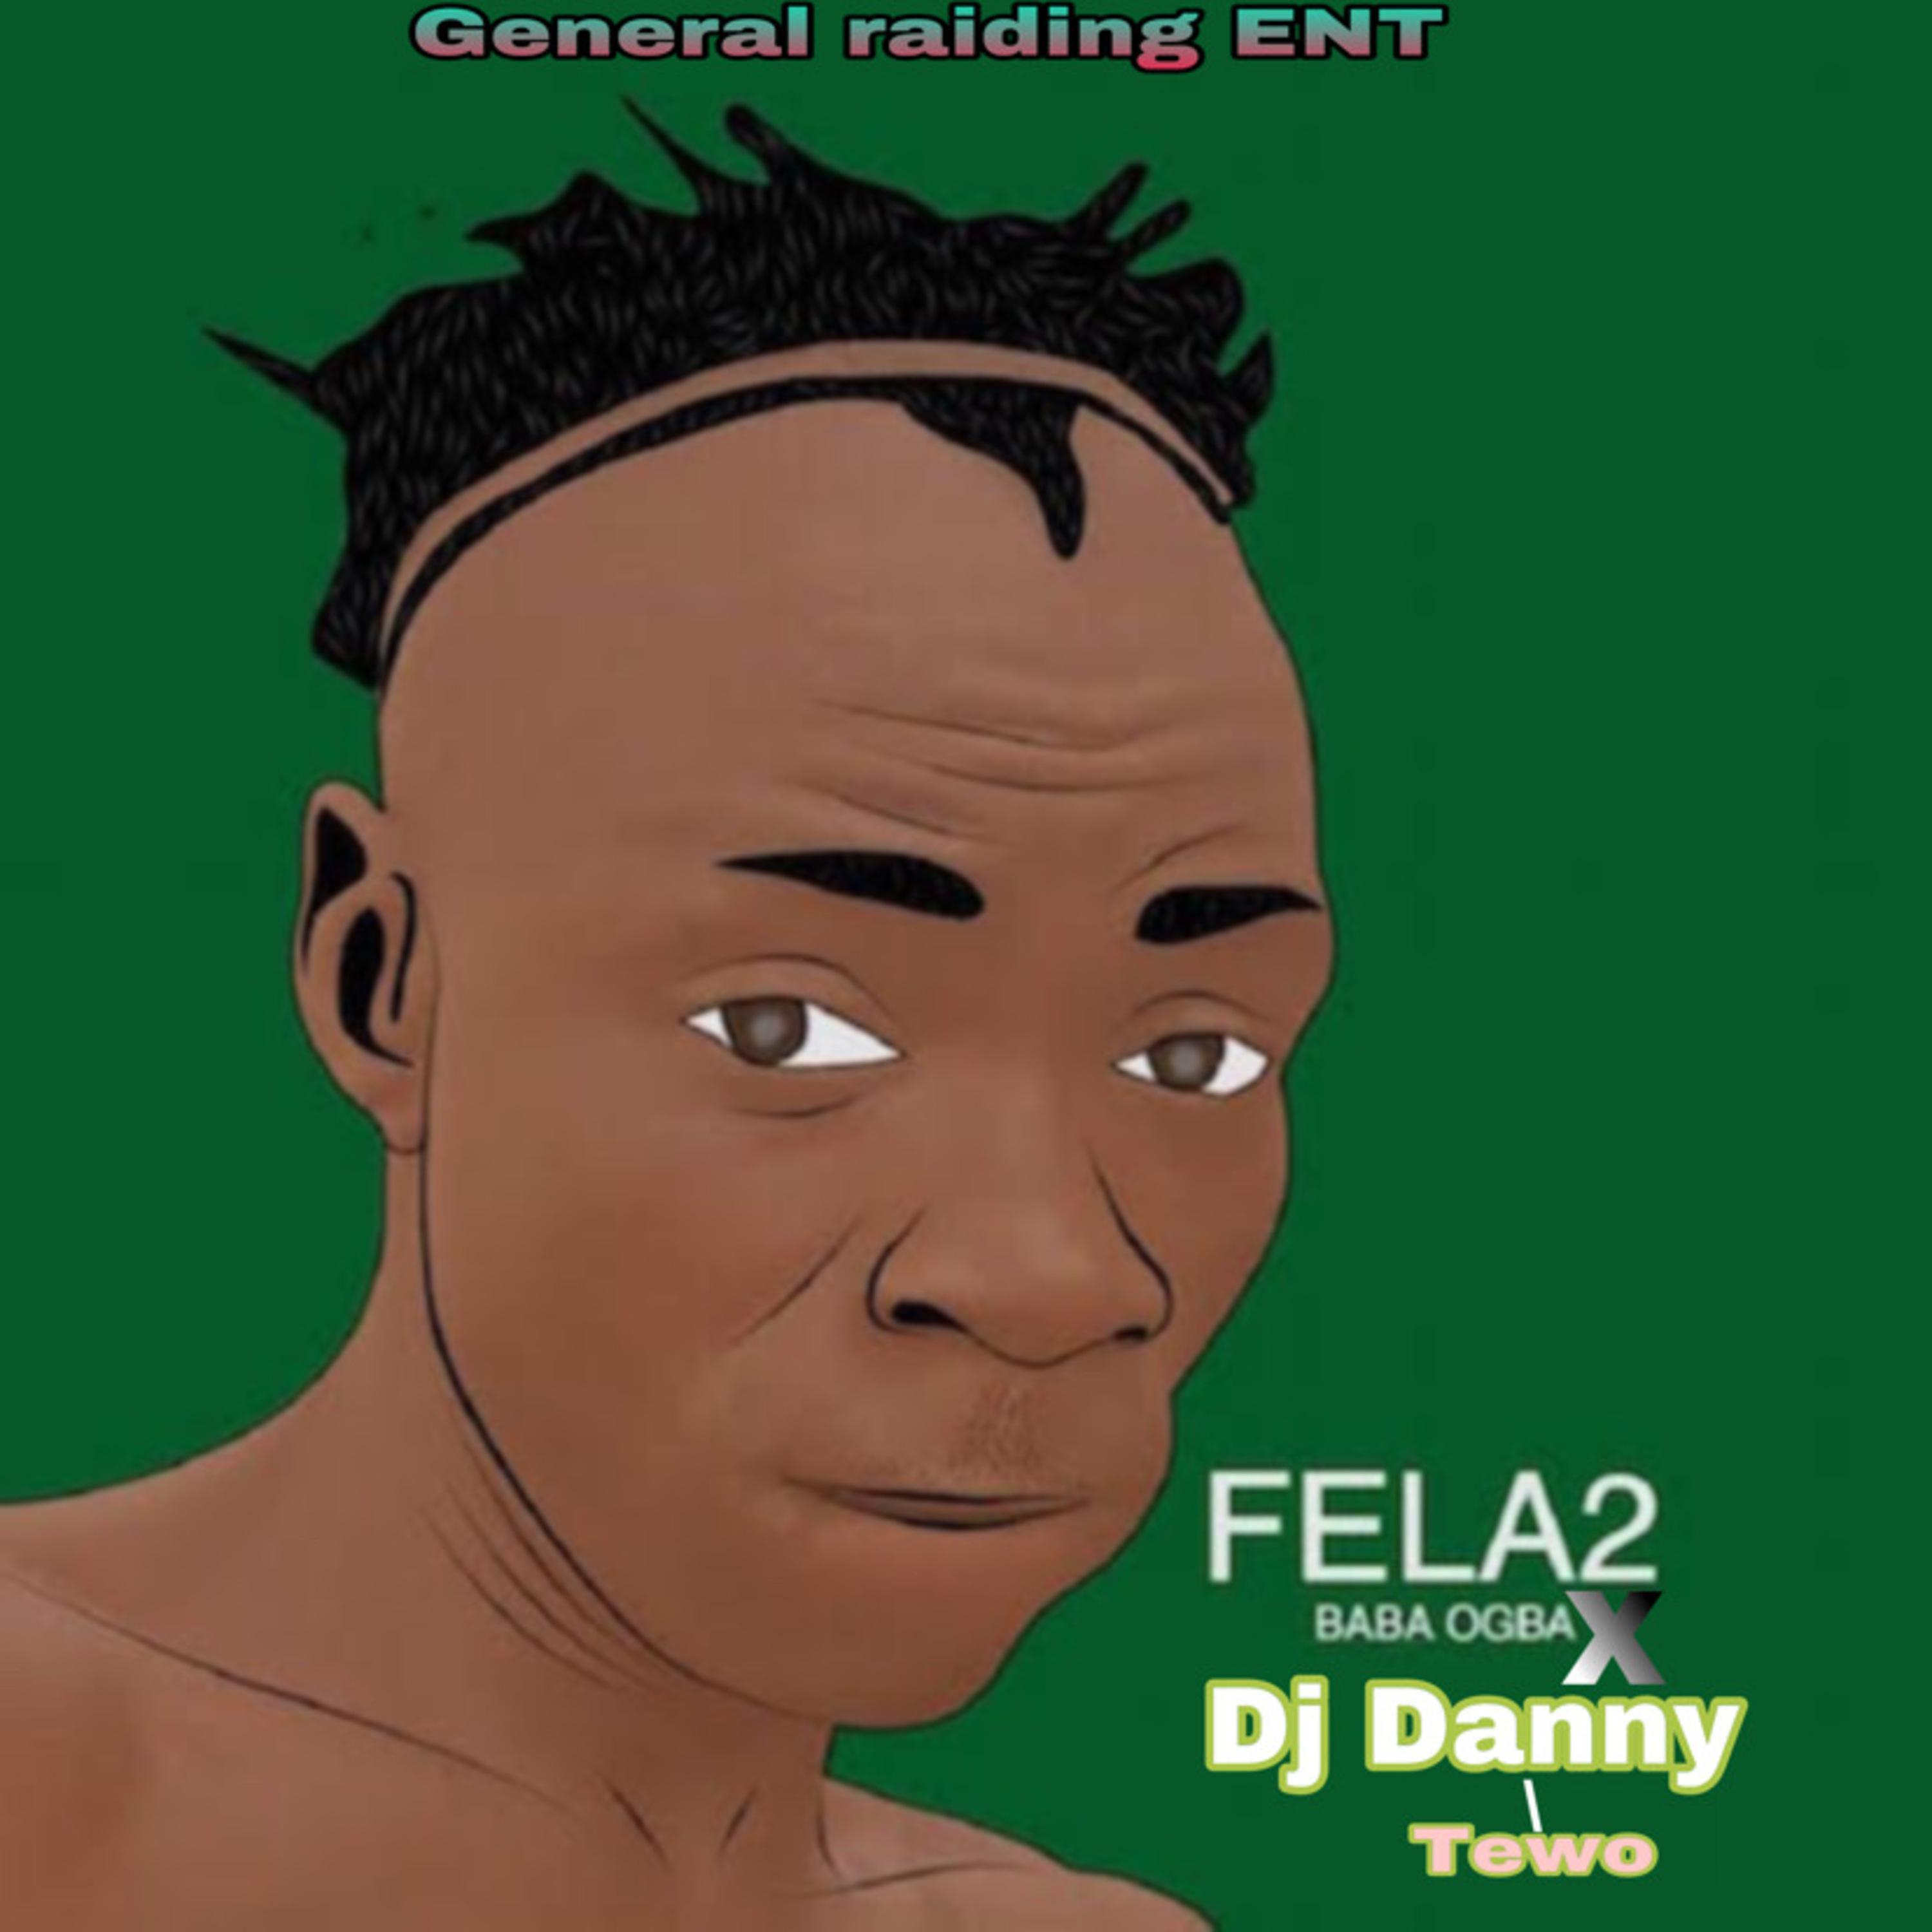 Dj Danny general Raiding - Fela2(TEWO)